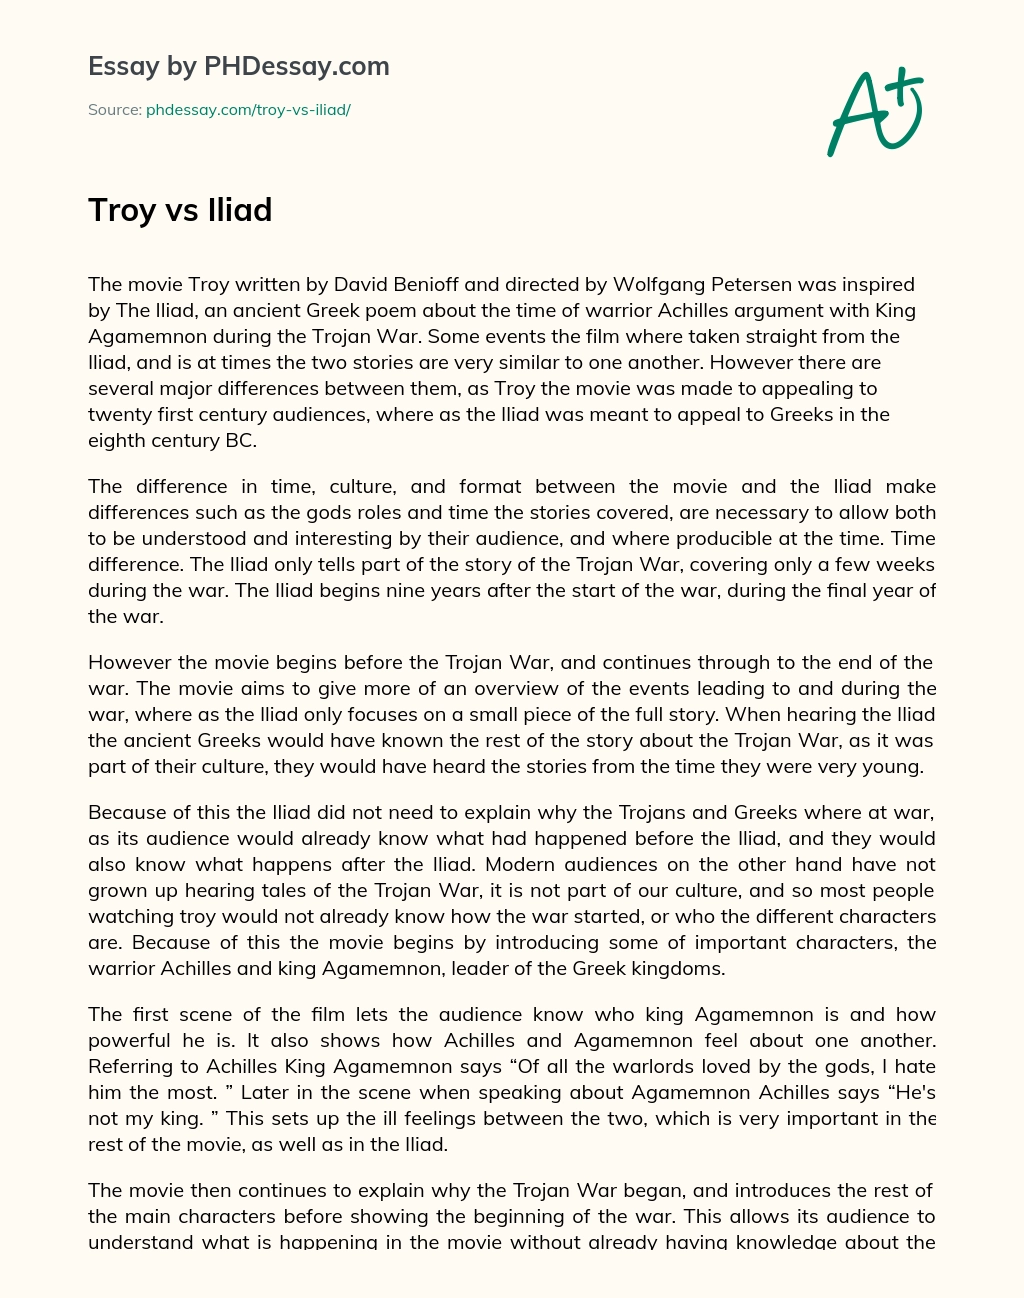 Troy vs Iliad essay